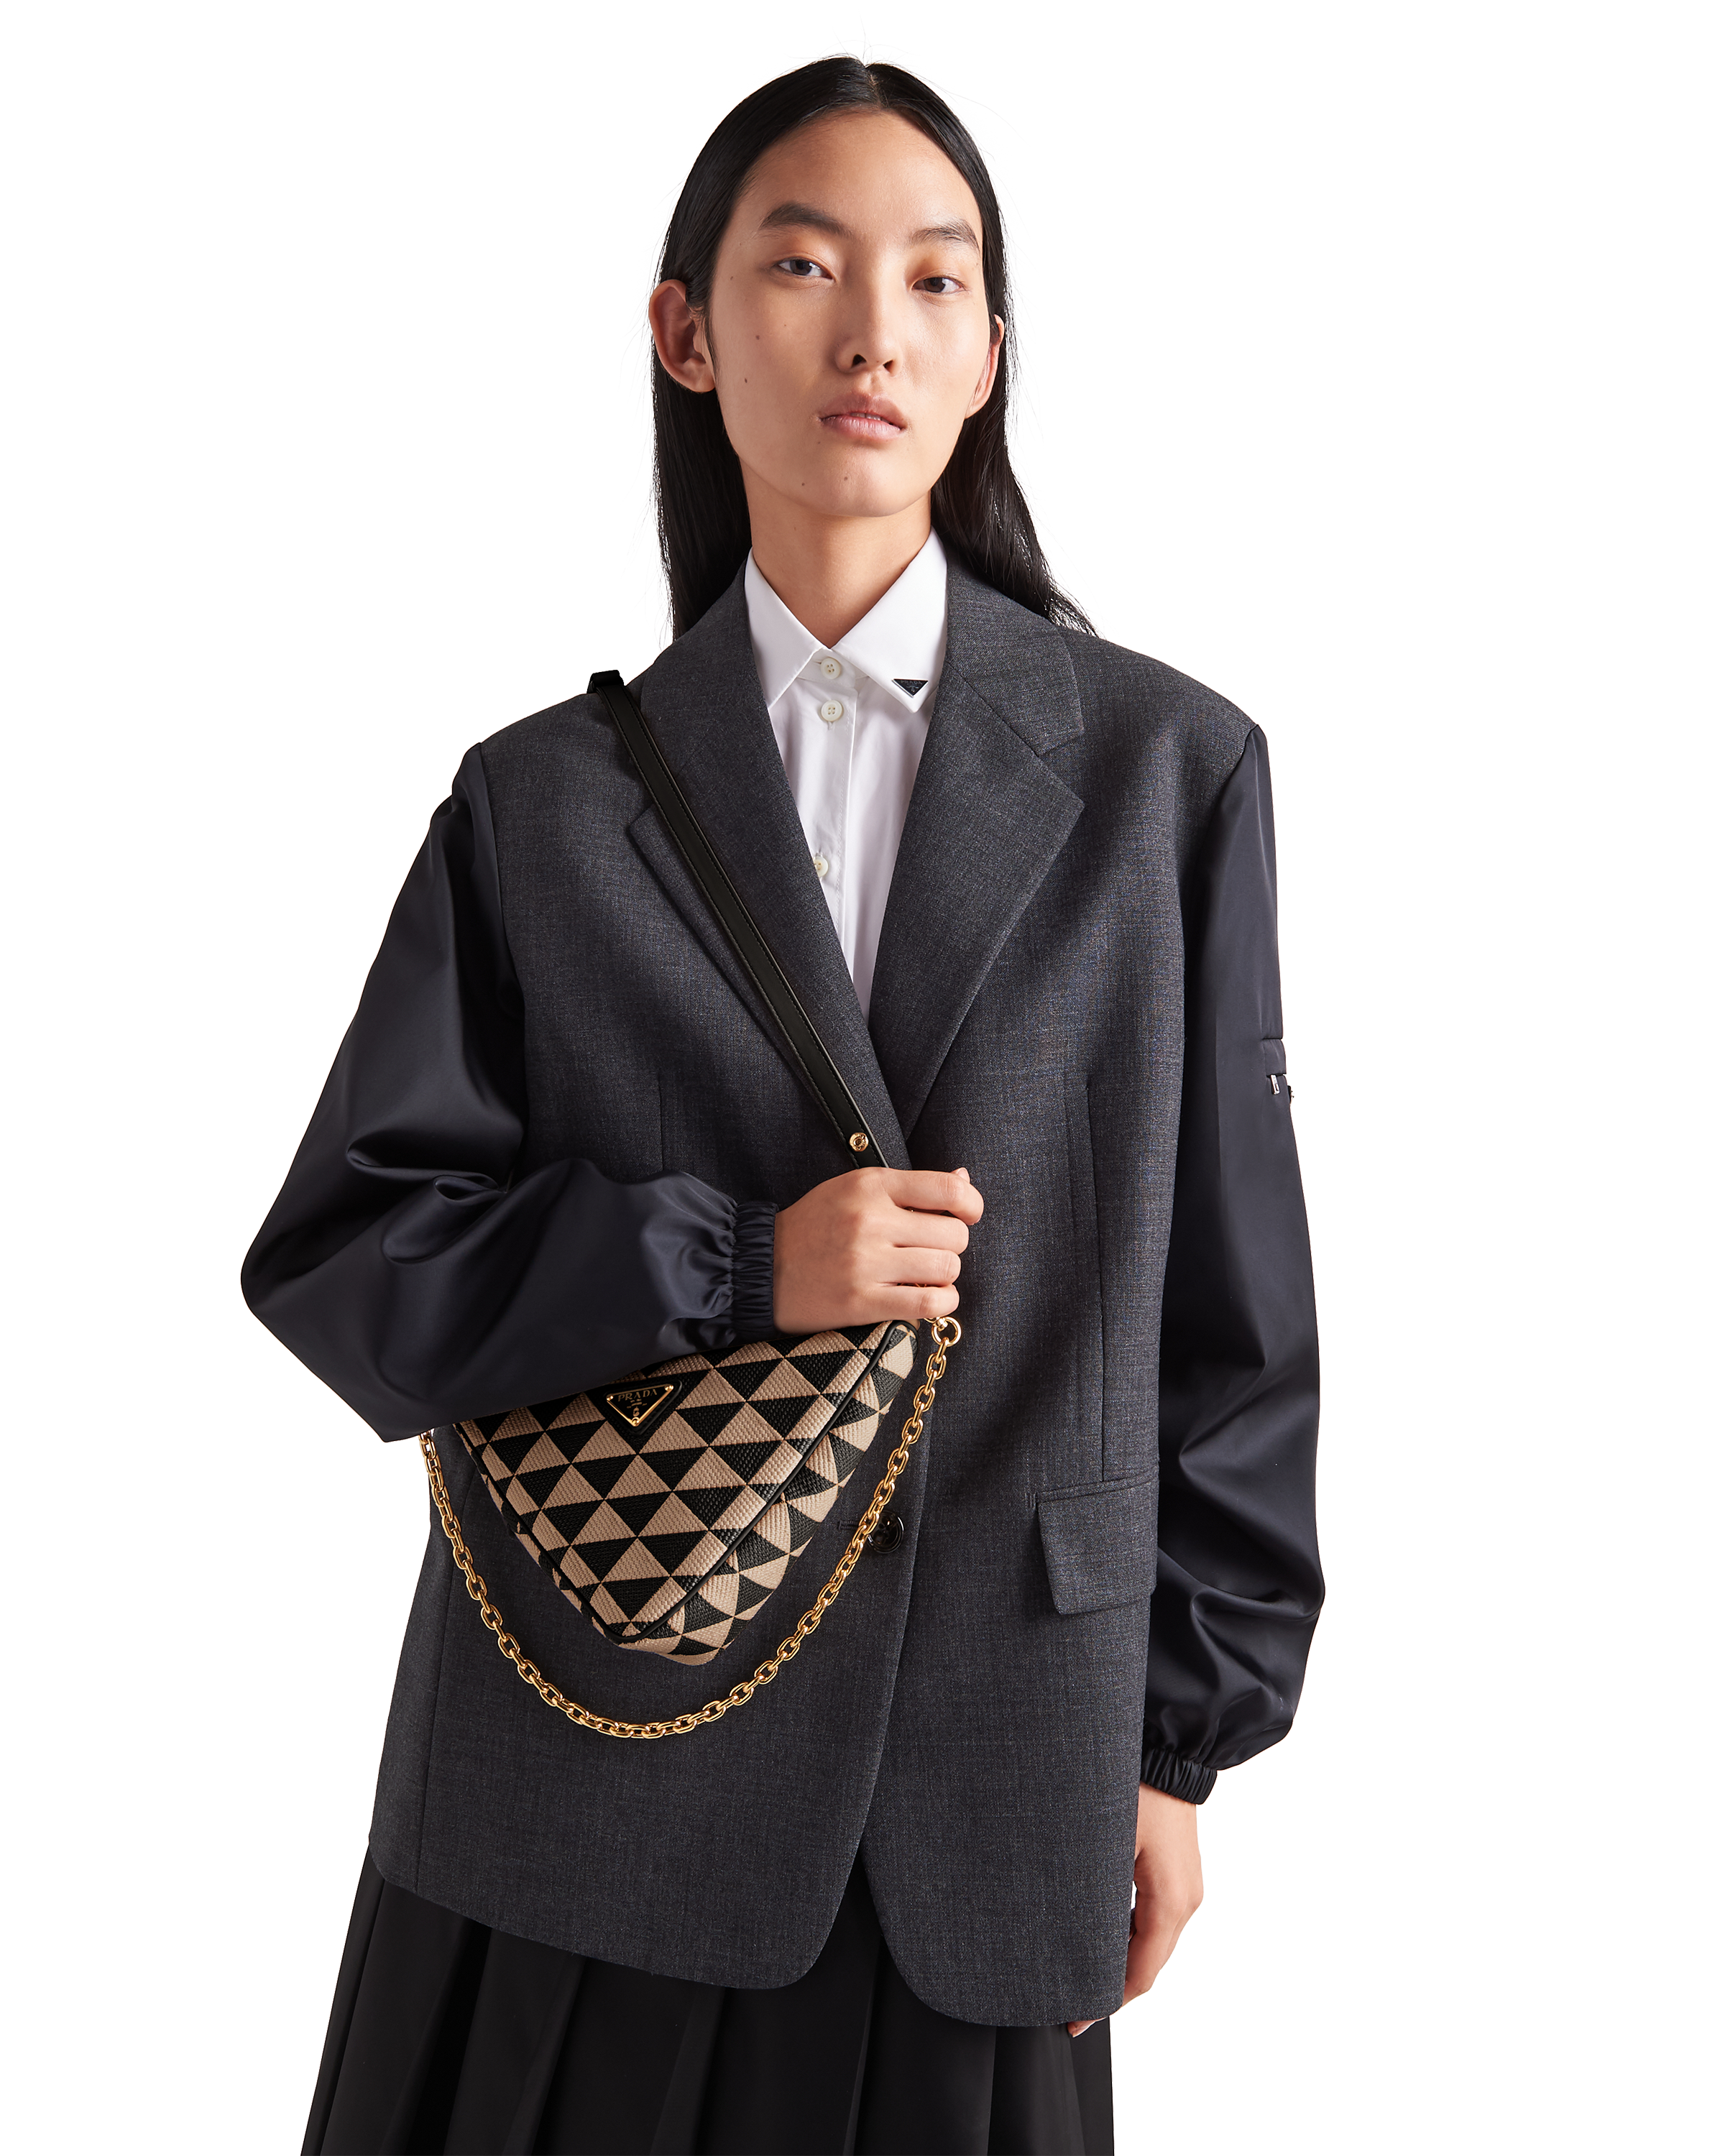 T Monogram Jacquard Embroidered Mini Bucket Bag: Women's Handbags